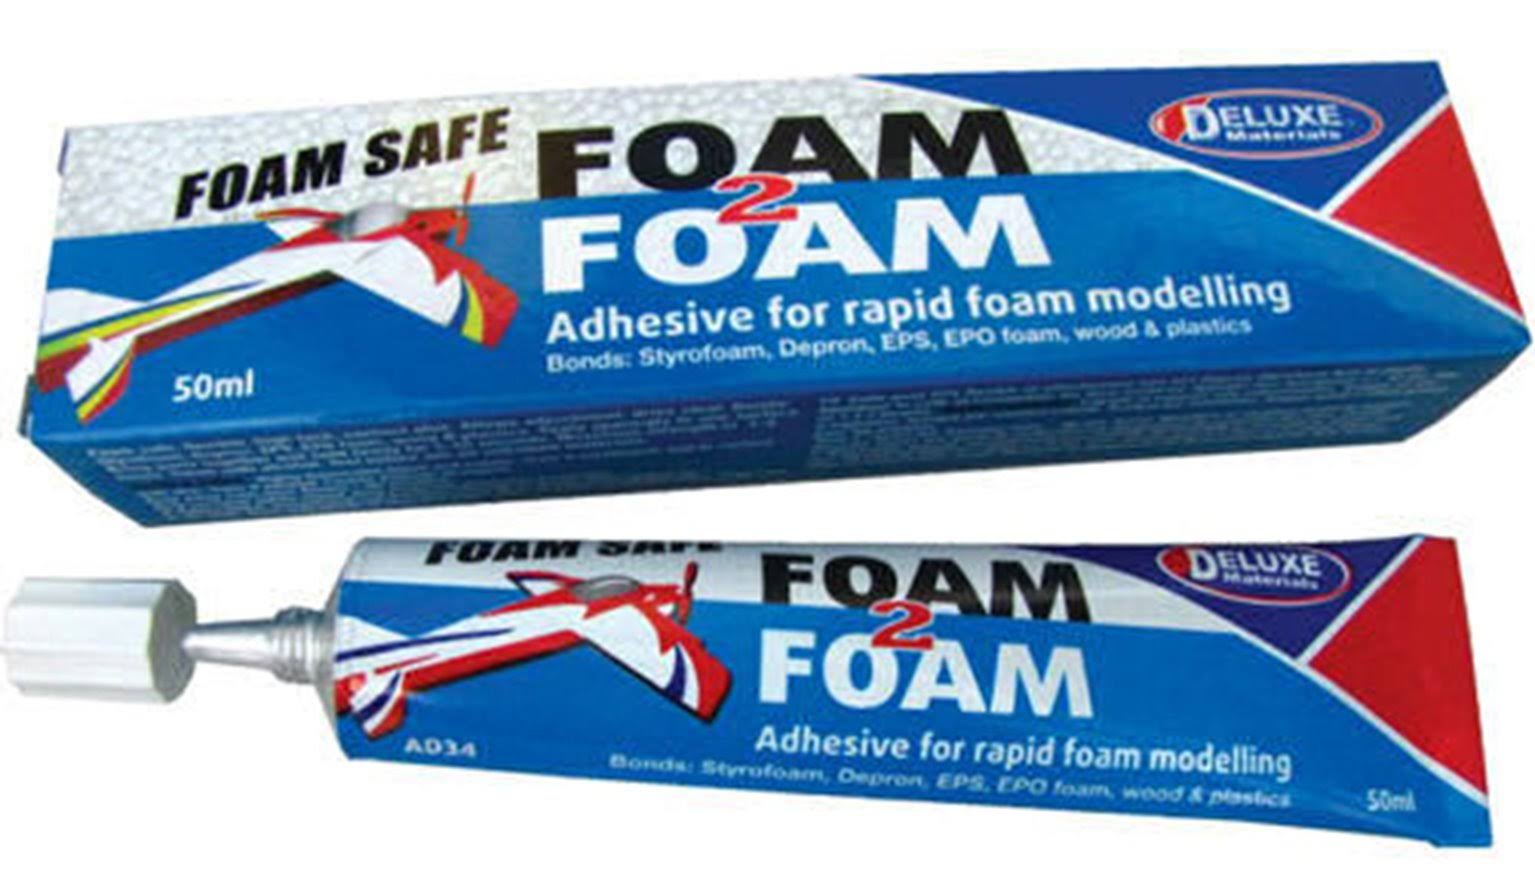 Deluxe Materials Foam 2 Foam 50 ml